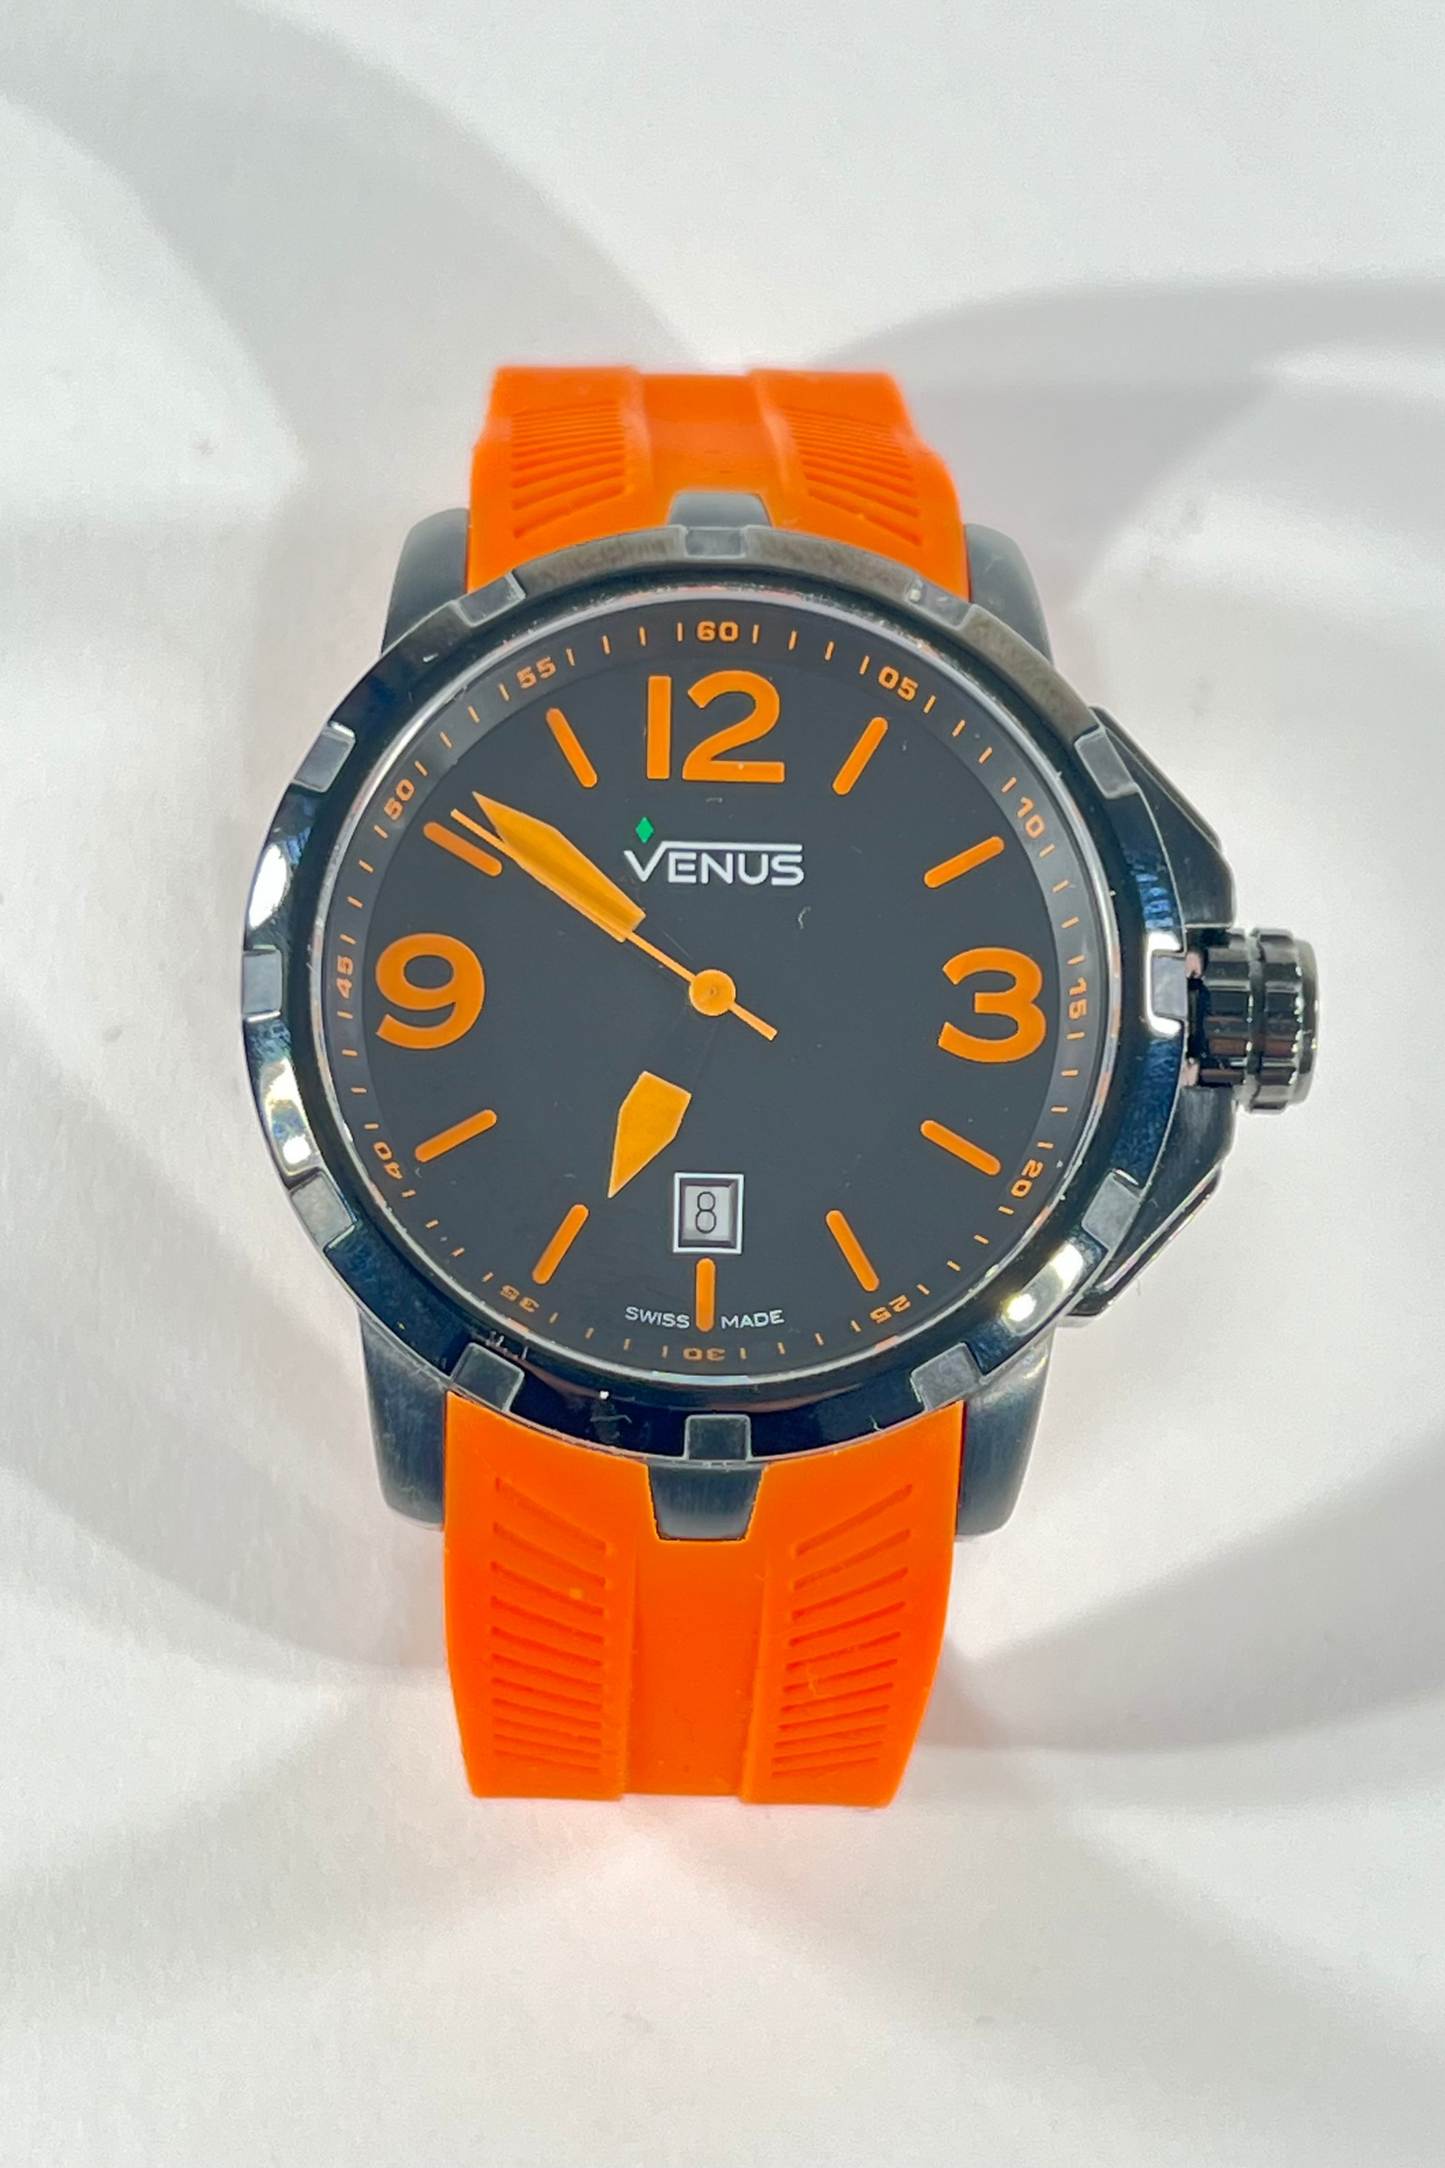 Venus Chroma Watch